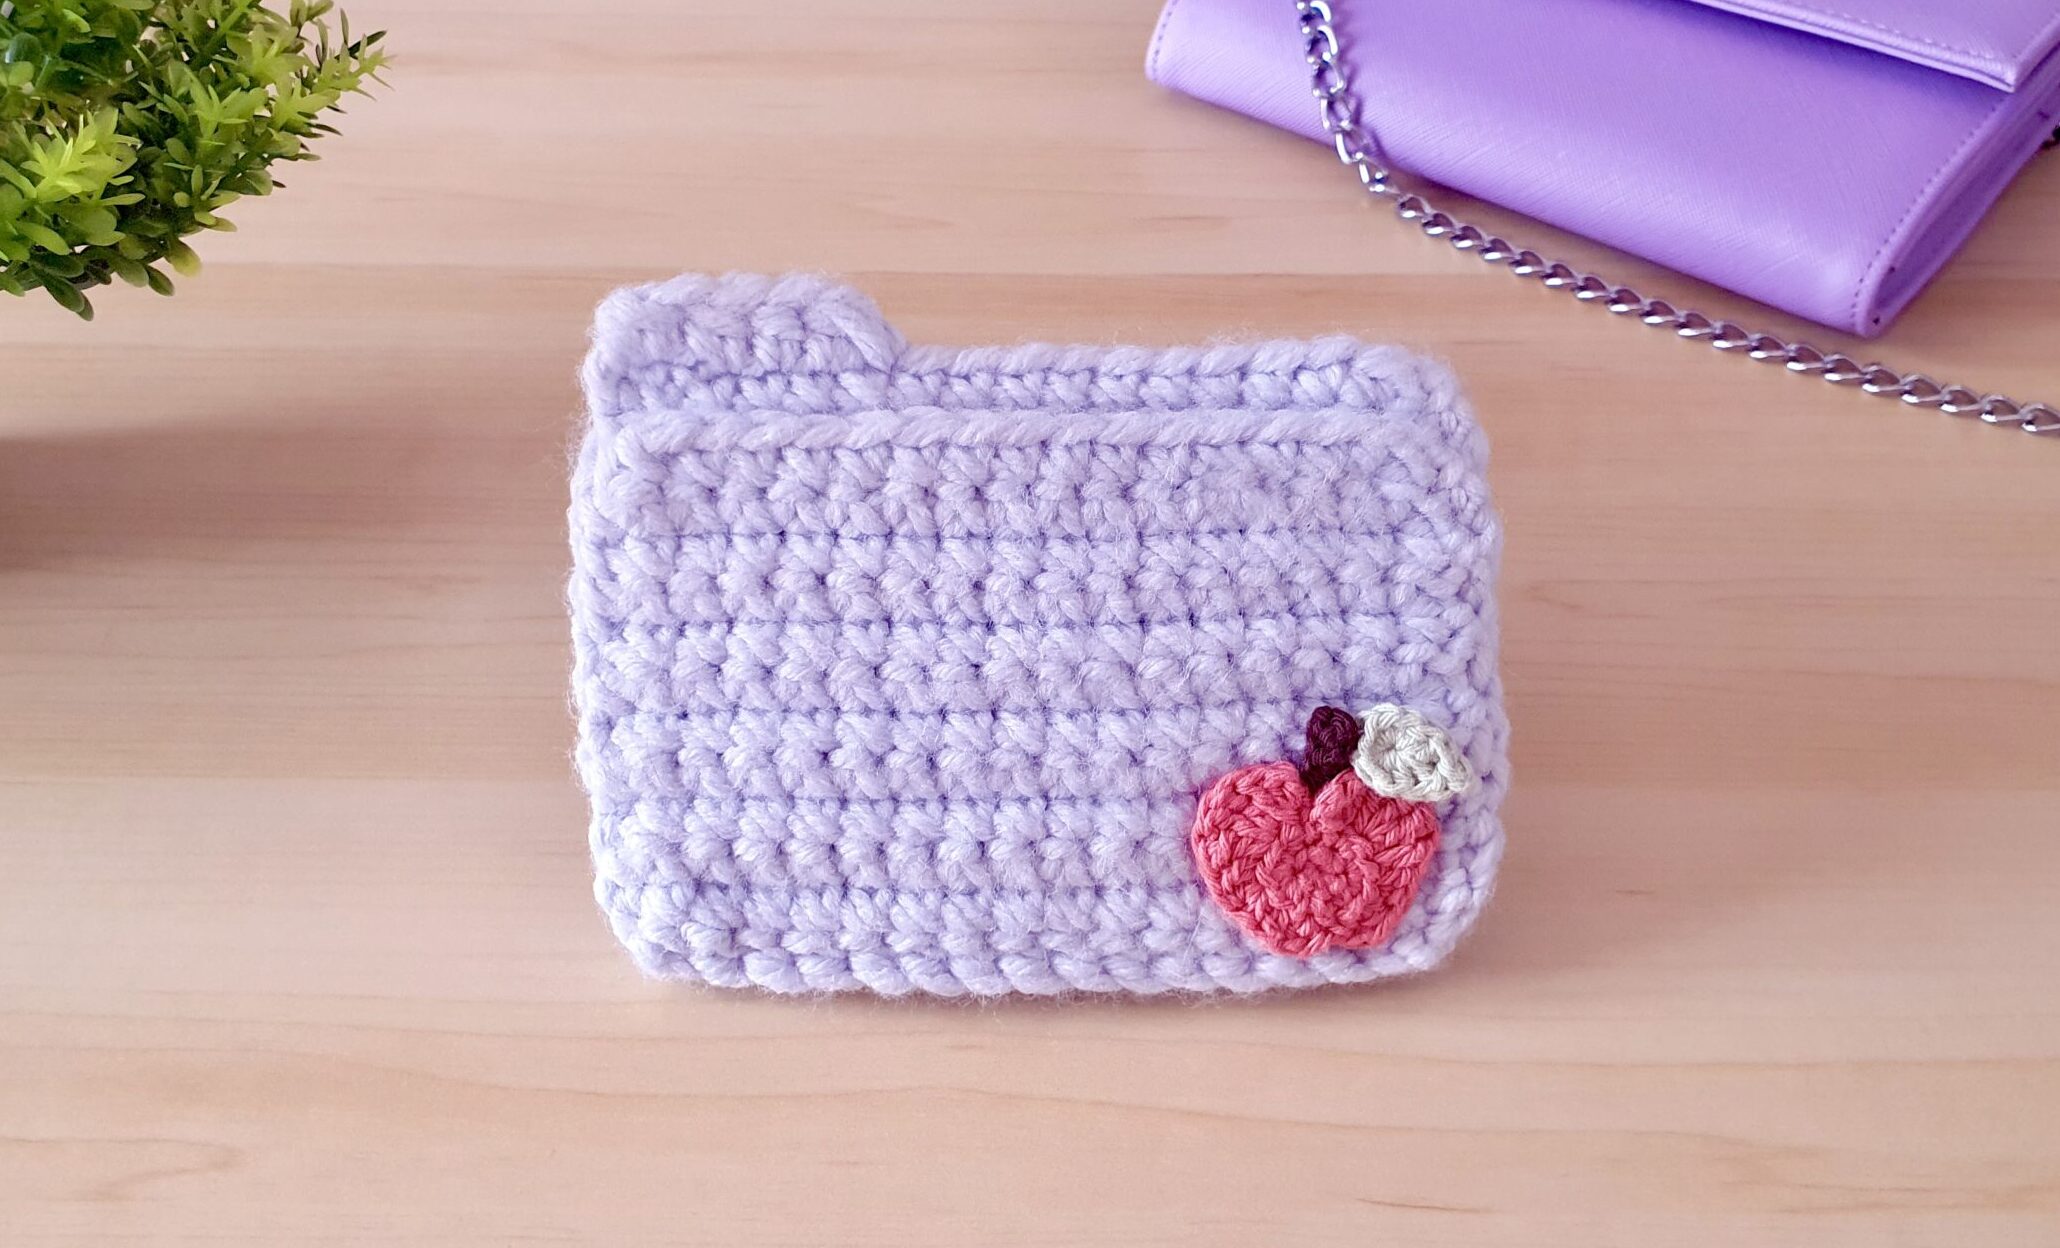 Crochet a Cute Apple Folder Wallet With Me Now